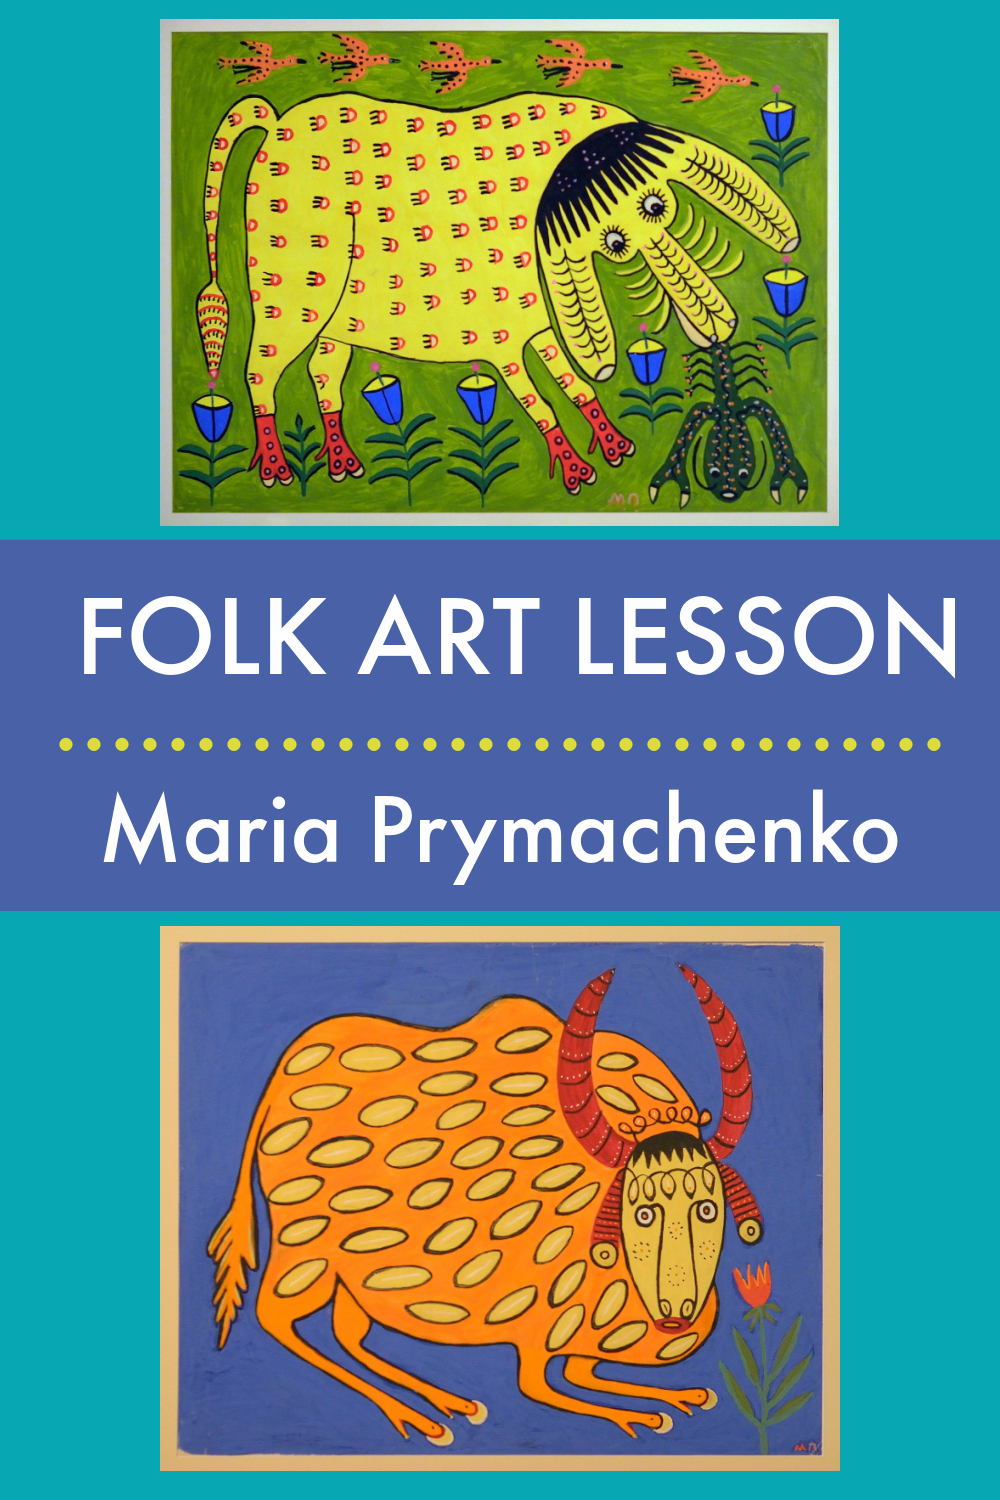 fold-art-lesson-for-children-Maria-Prymachenko